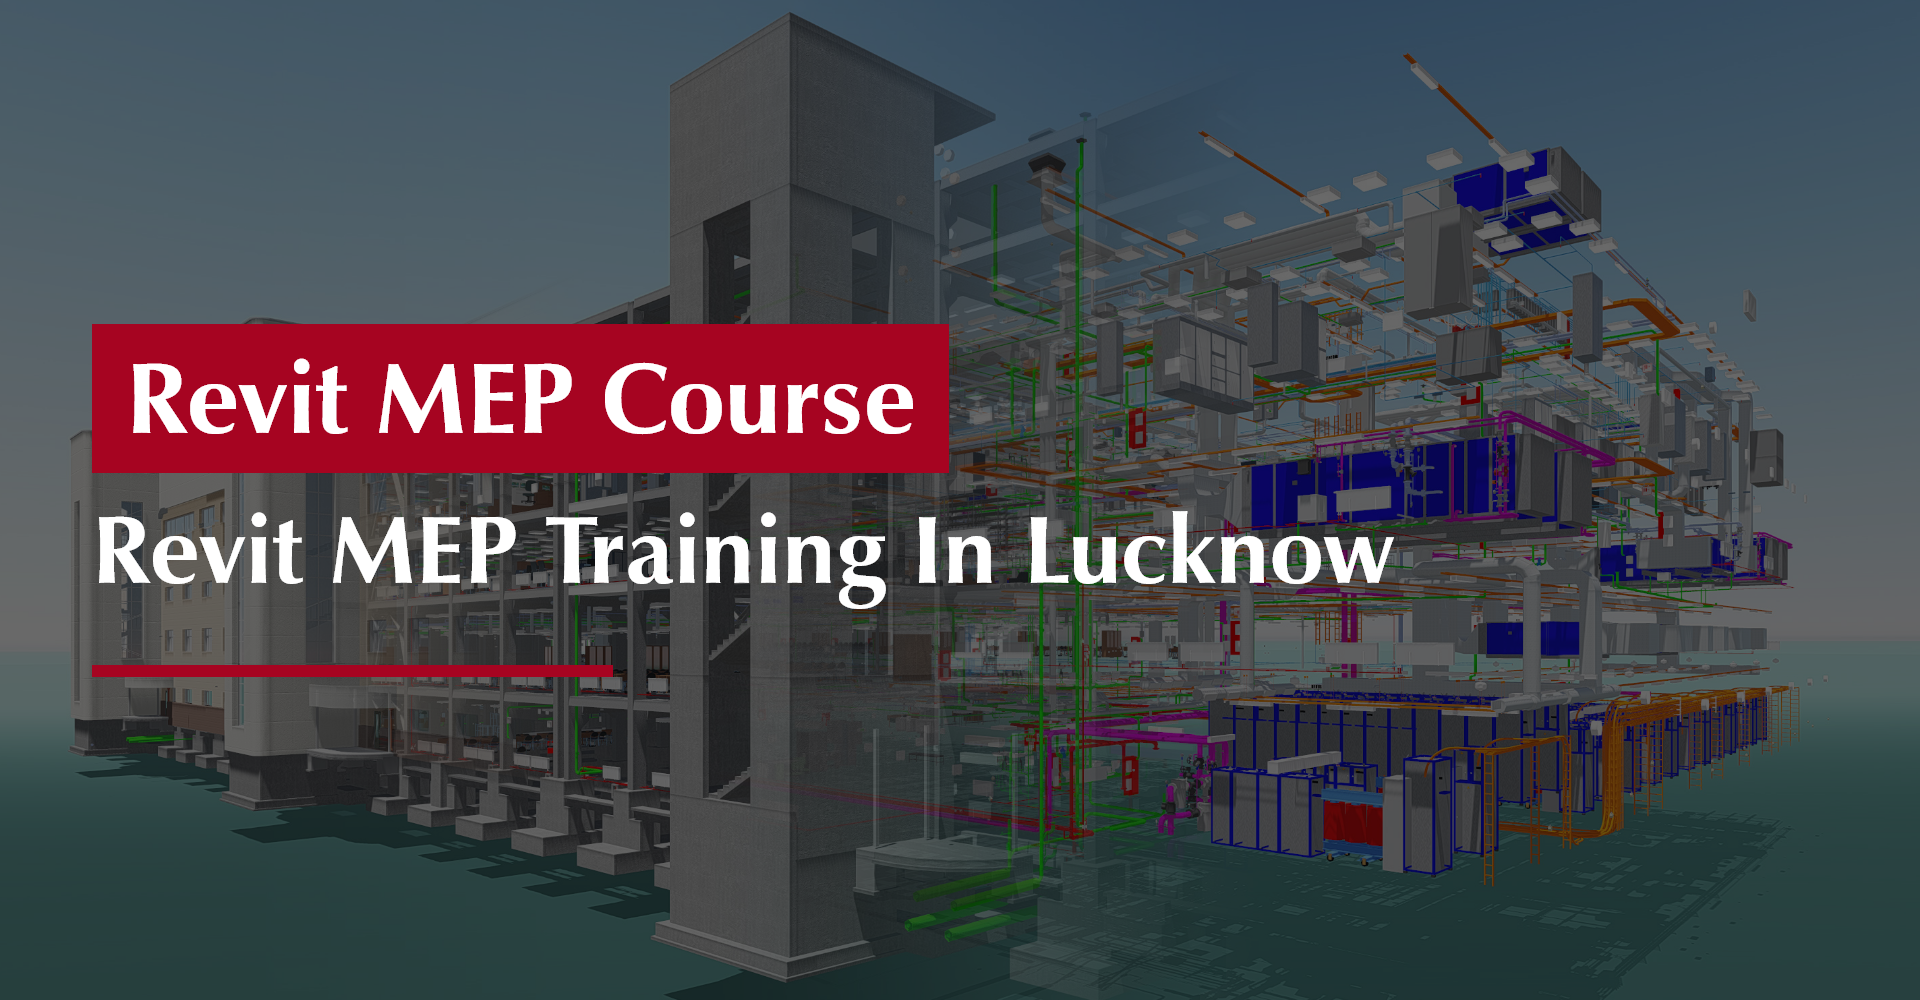 Revit MEP Course | Revit MEP Training in Lucknow